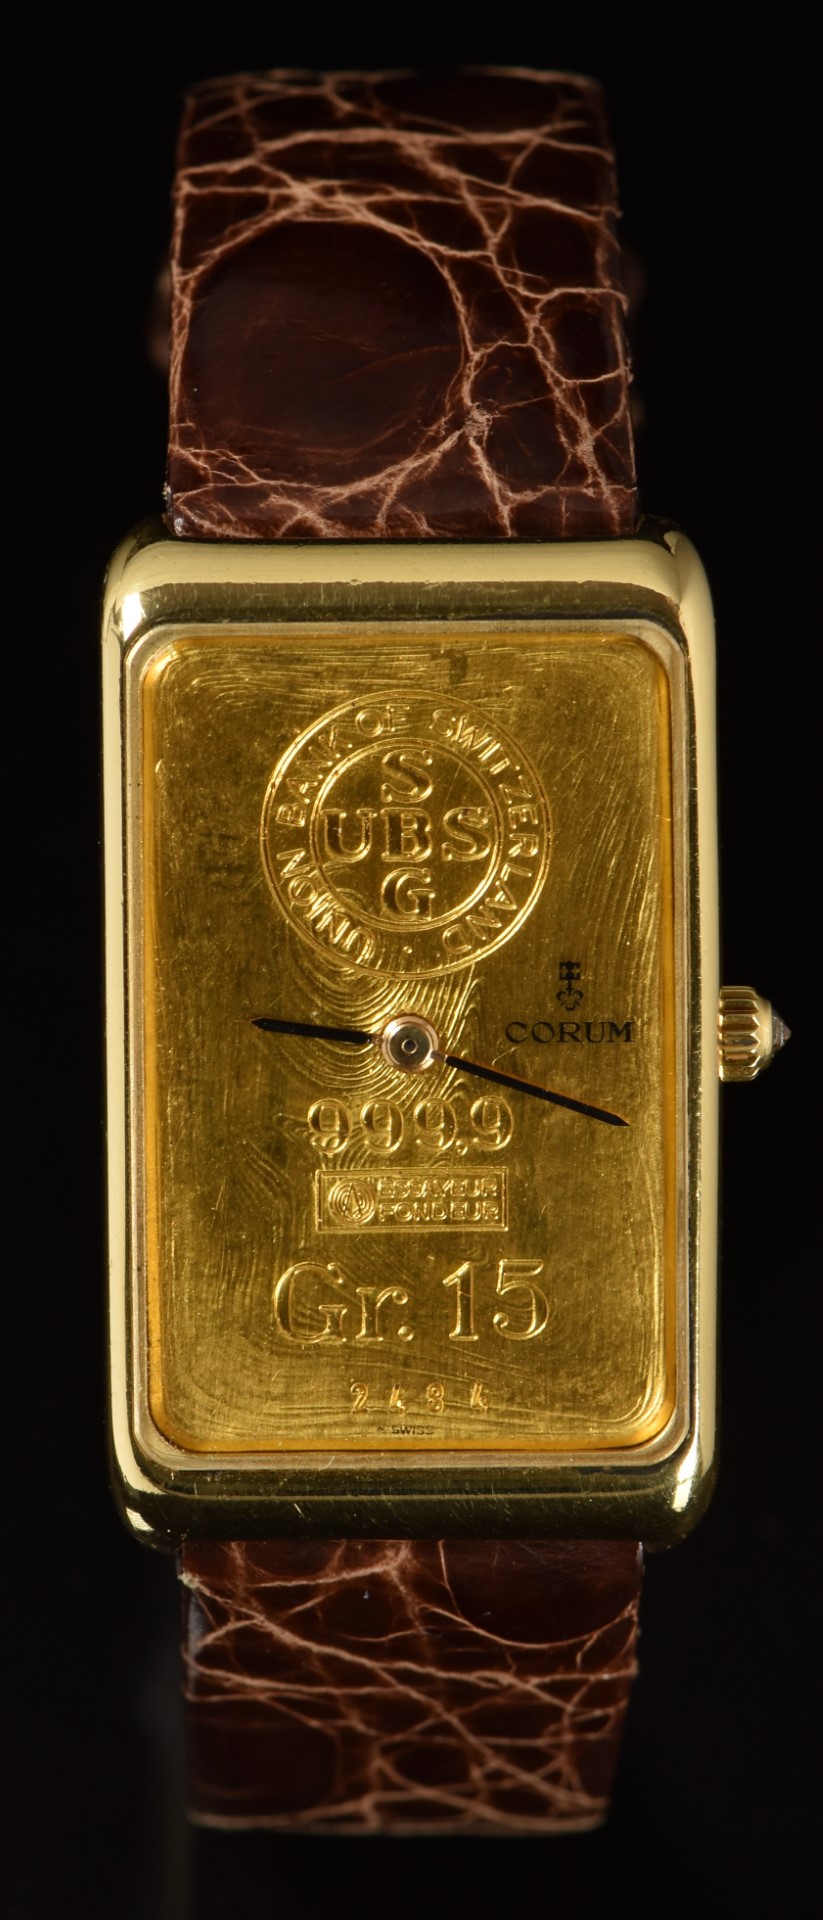 Corum 18ct gold gentleman's wristwatch with 'Union Bank of Switzerland 9999 GR15' ingot dial,